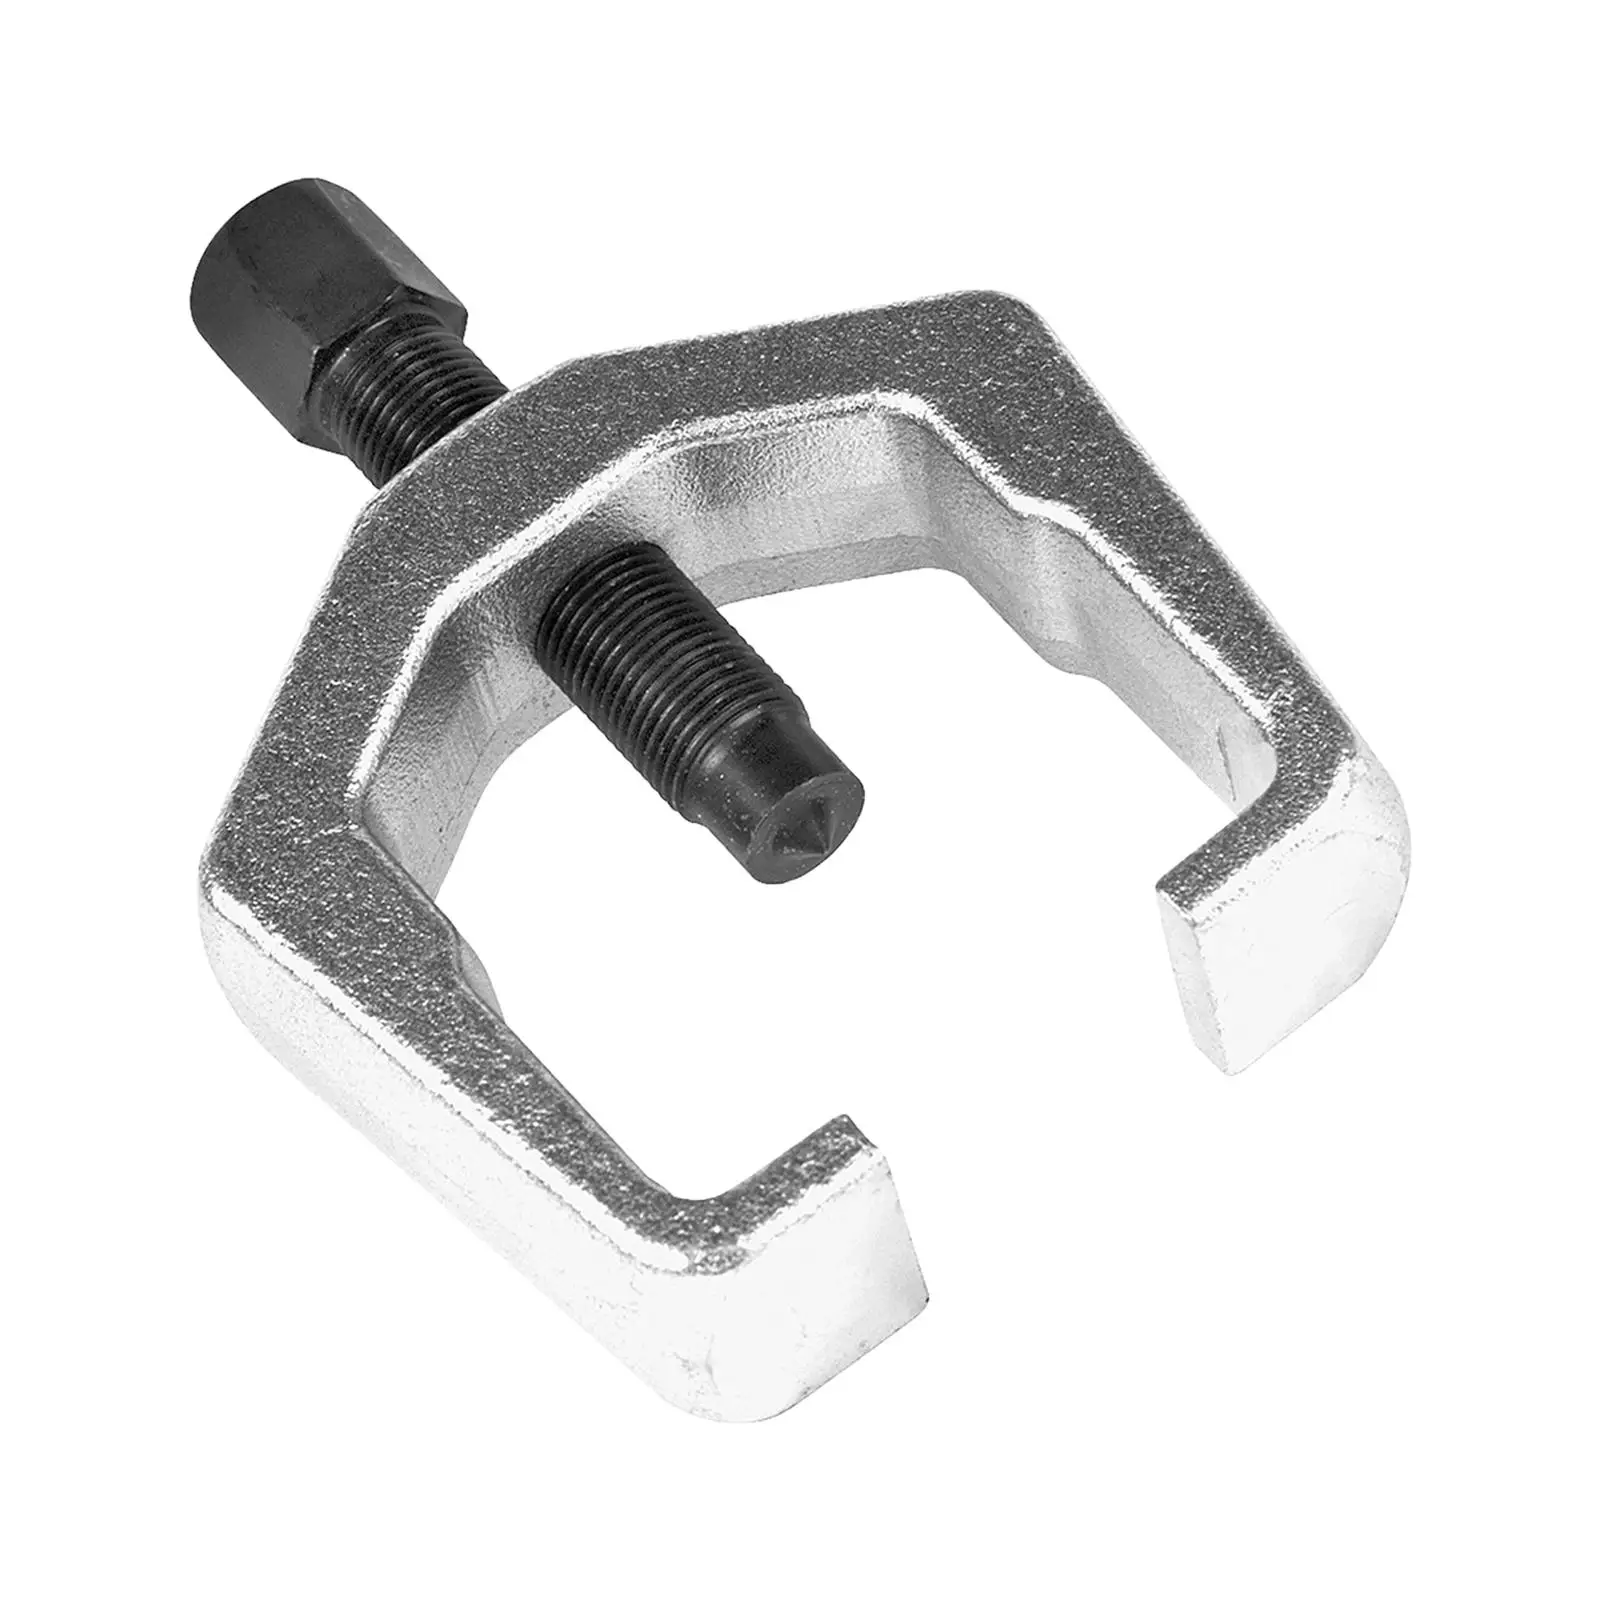 Slack Adjuster Puller High Performance Works on Automatic Adjusters 2 Jaw Gear